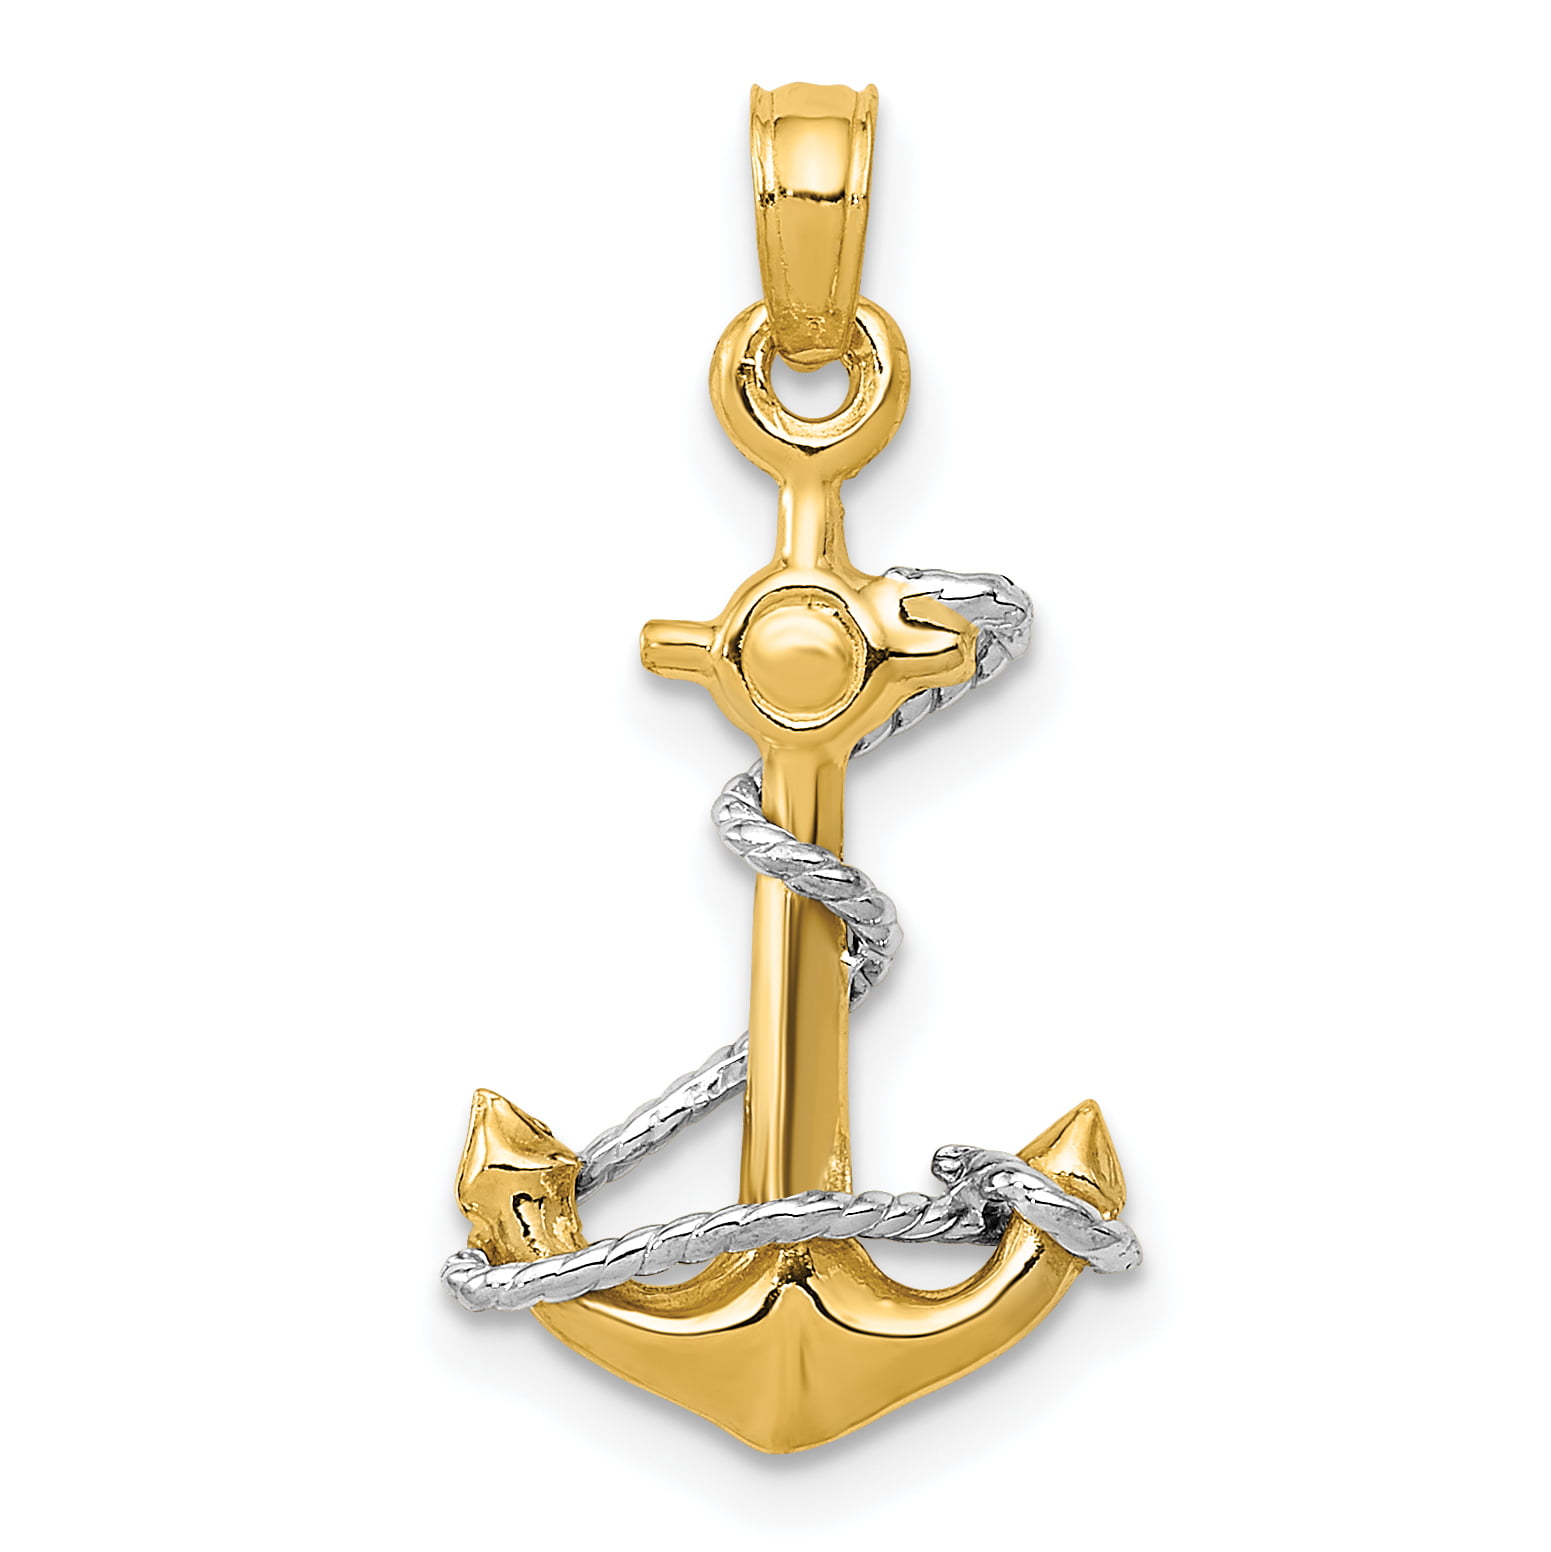 14k Yellow Gold 3D Ship Anchor and Wheel Nautical Pendant Necklace 